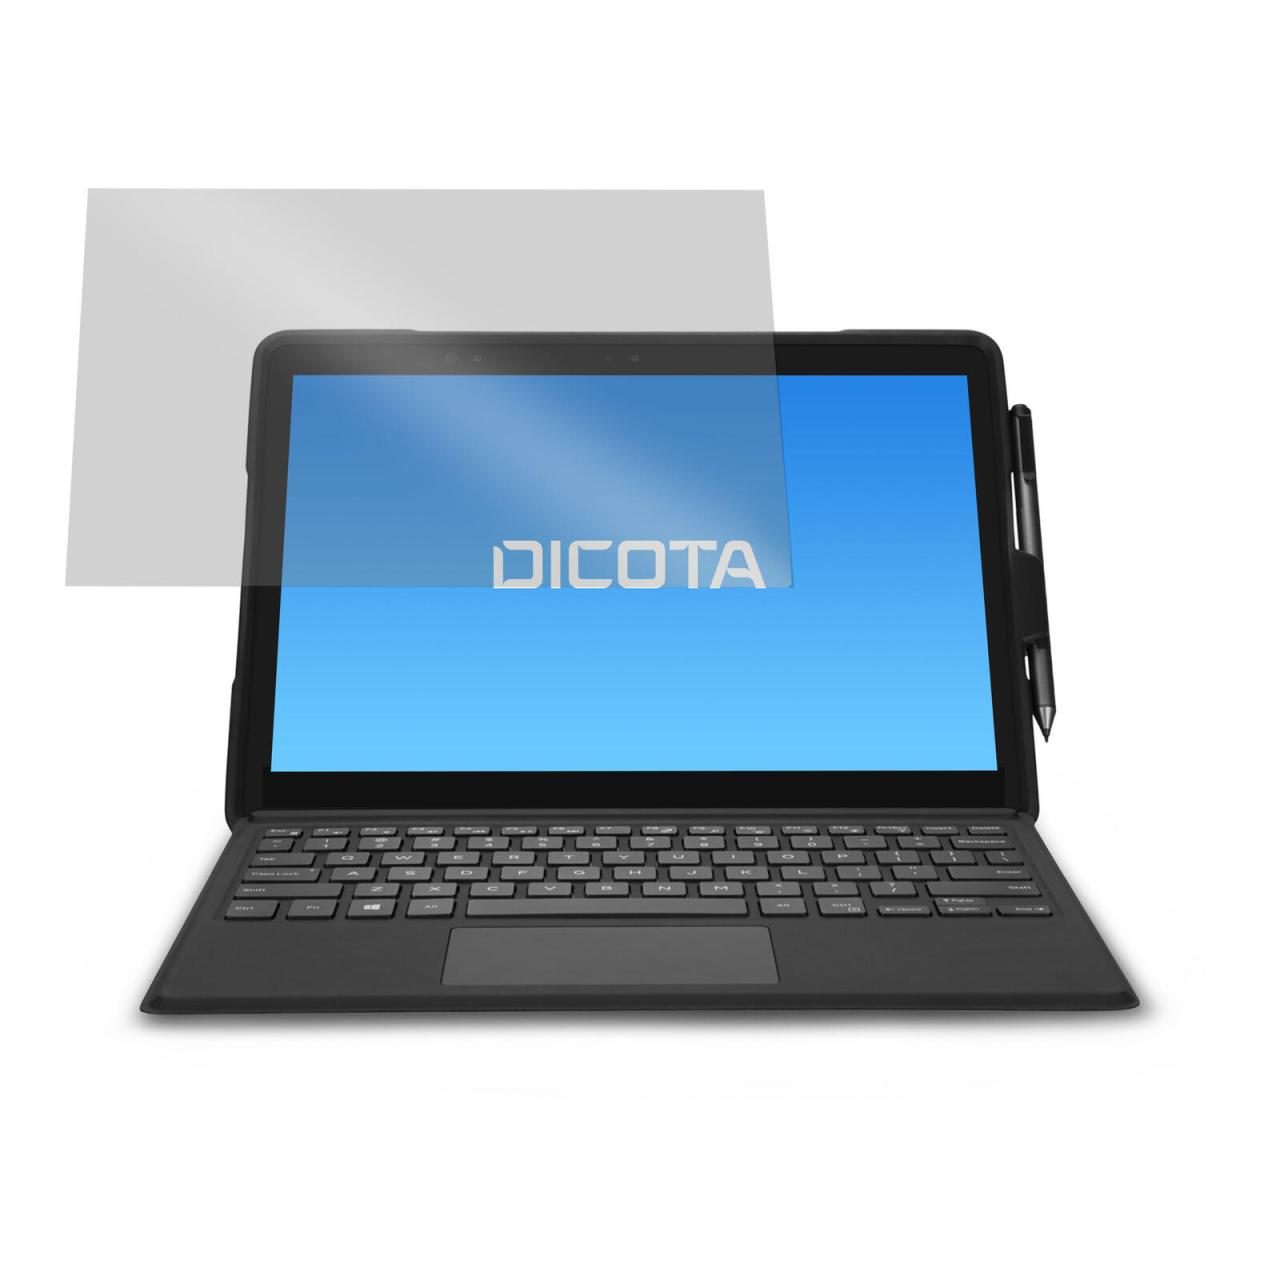 DICOTA Blendschutzfilter für DELL Latitude 5285 von Dicota